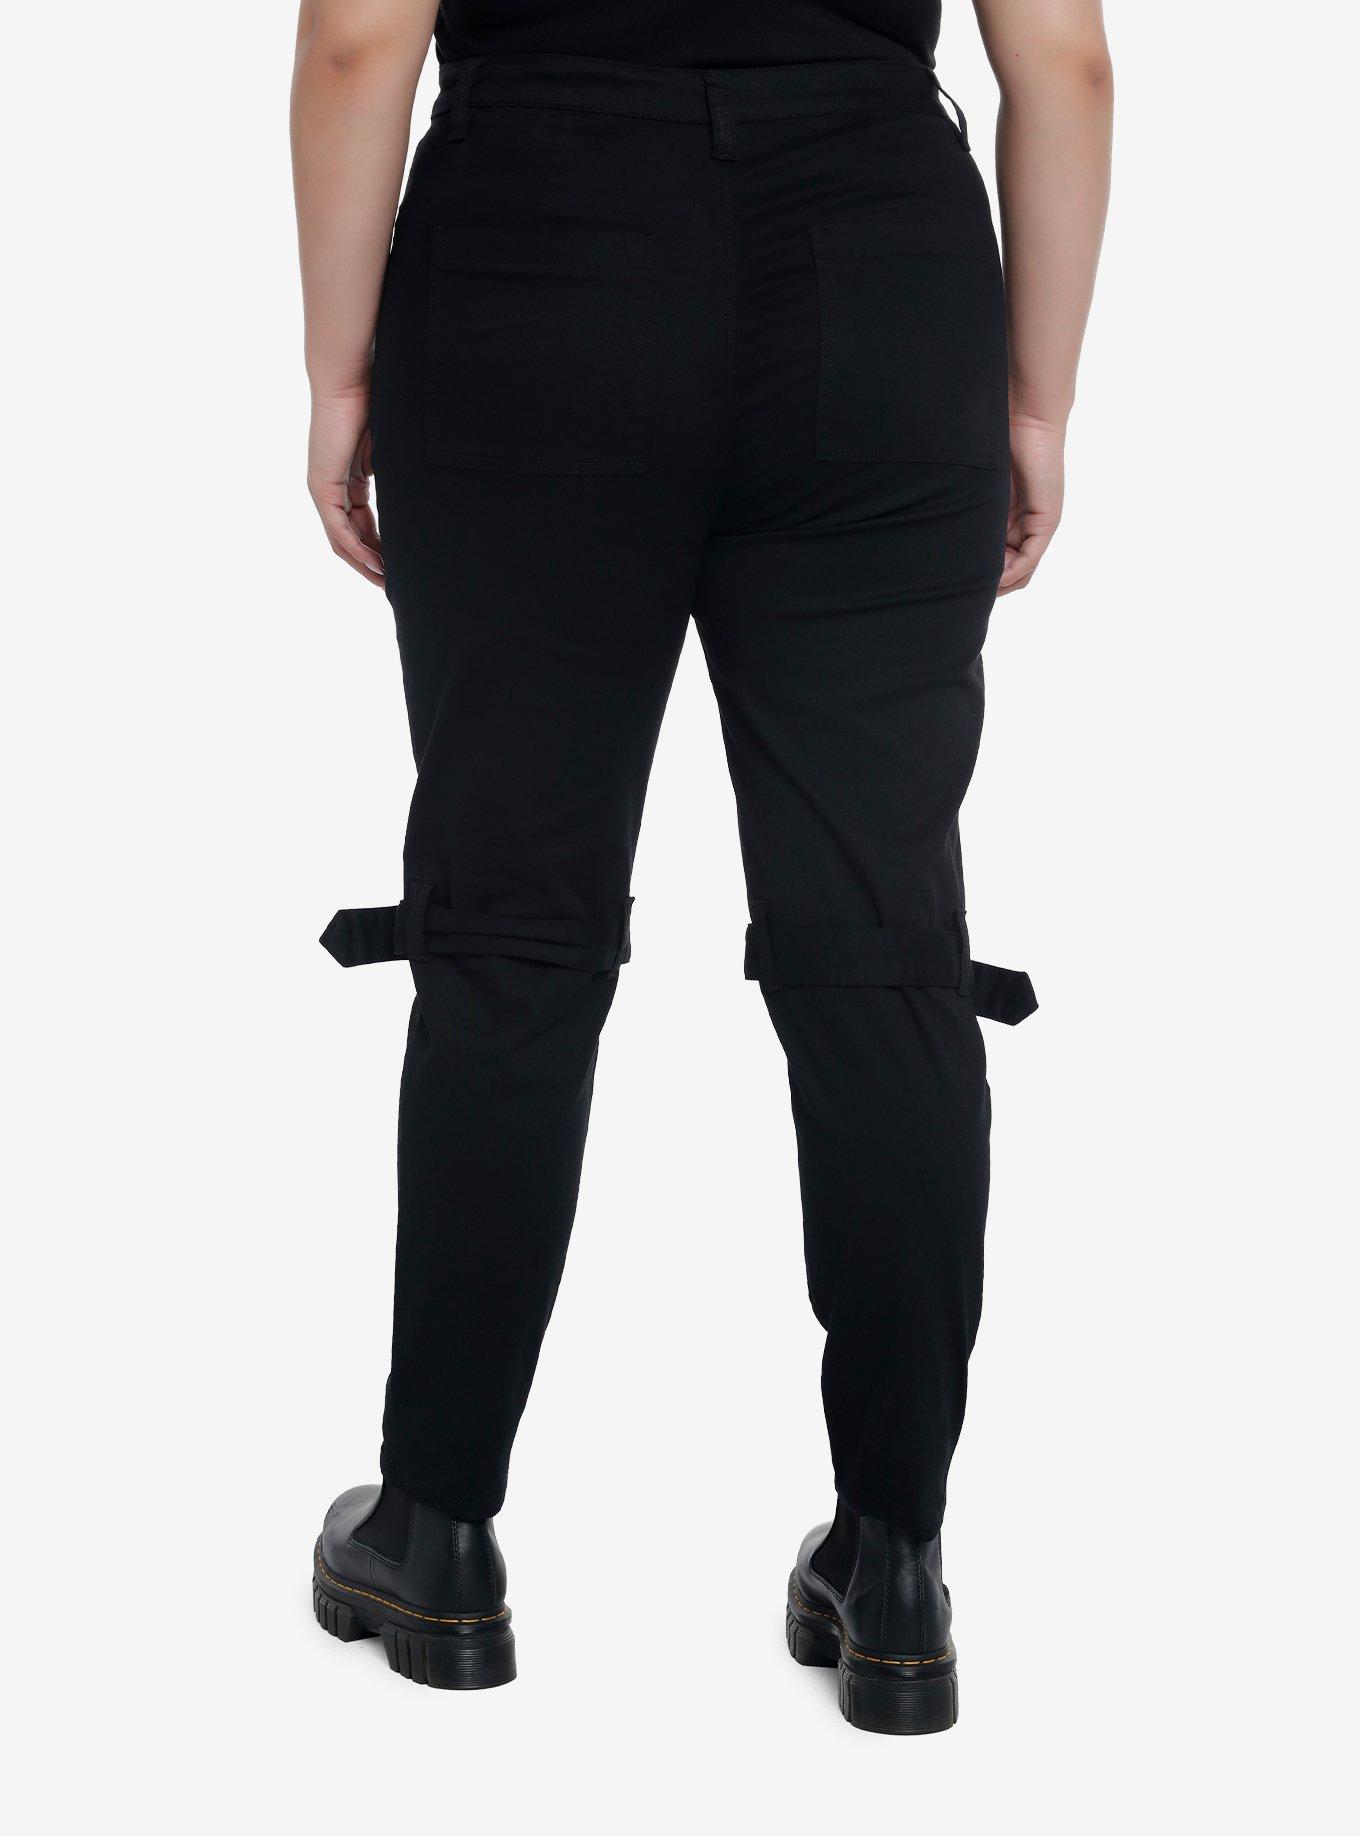 Black Grommet Zipper Super Skinny Jeans Plus Size, BLACK, alternate